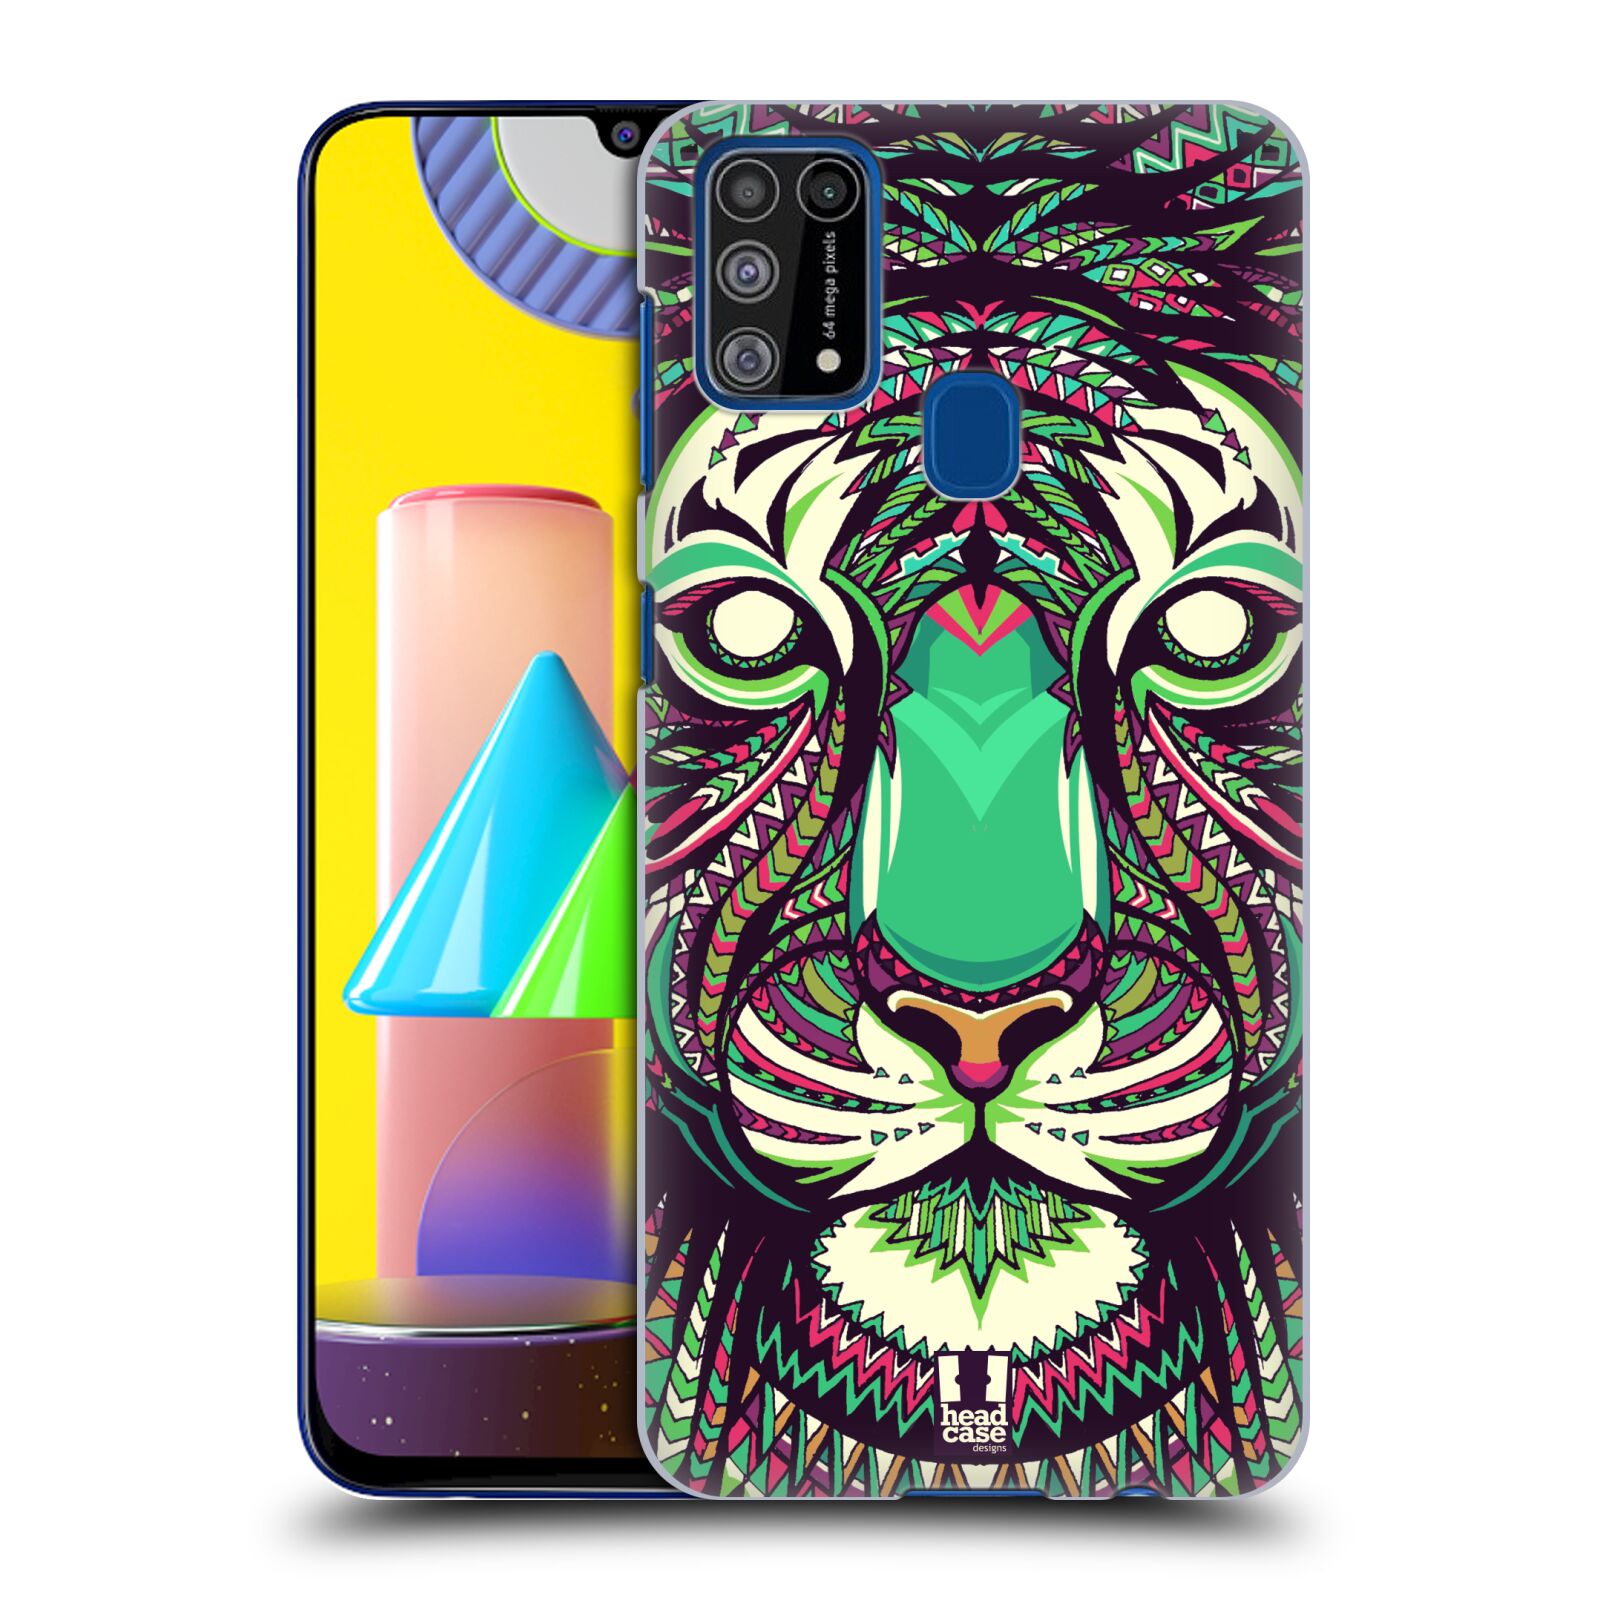 Plastový obal HEAD CASE na mobil Samsung Galaxy M31 vzor Aztécký motiv zvíře 2 tygr